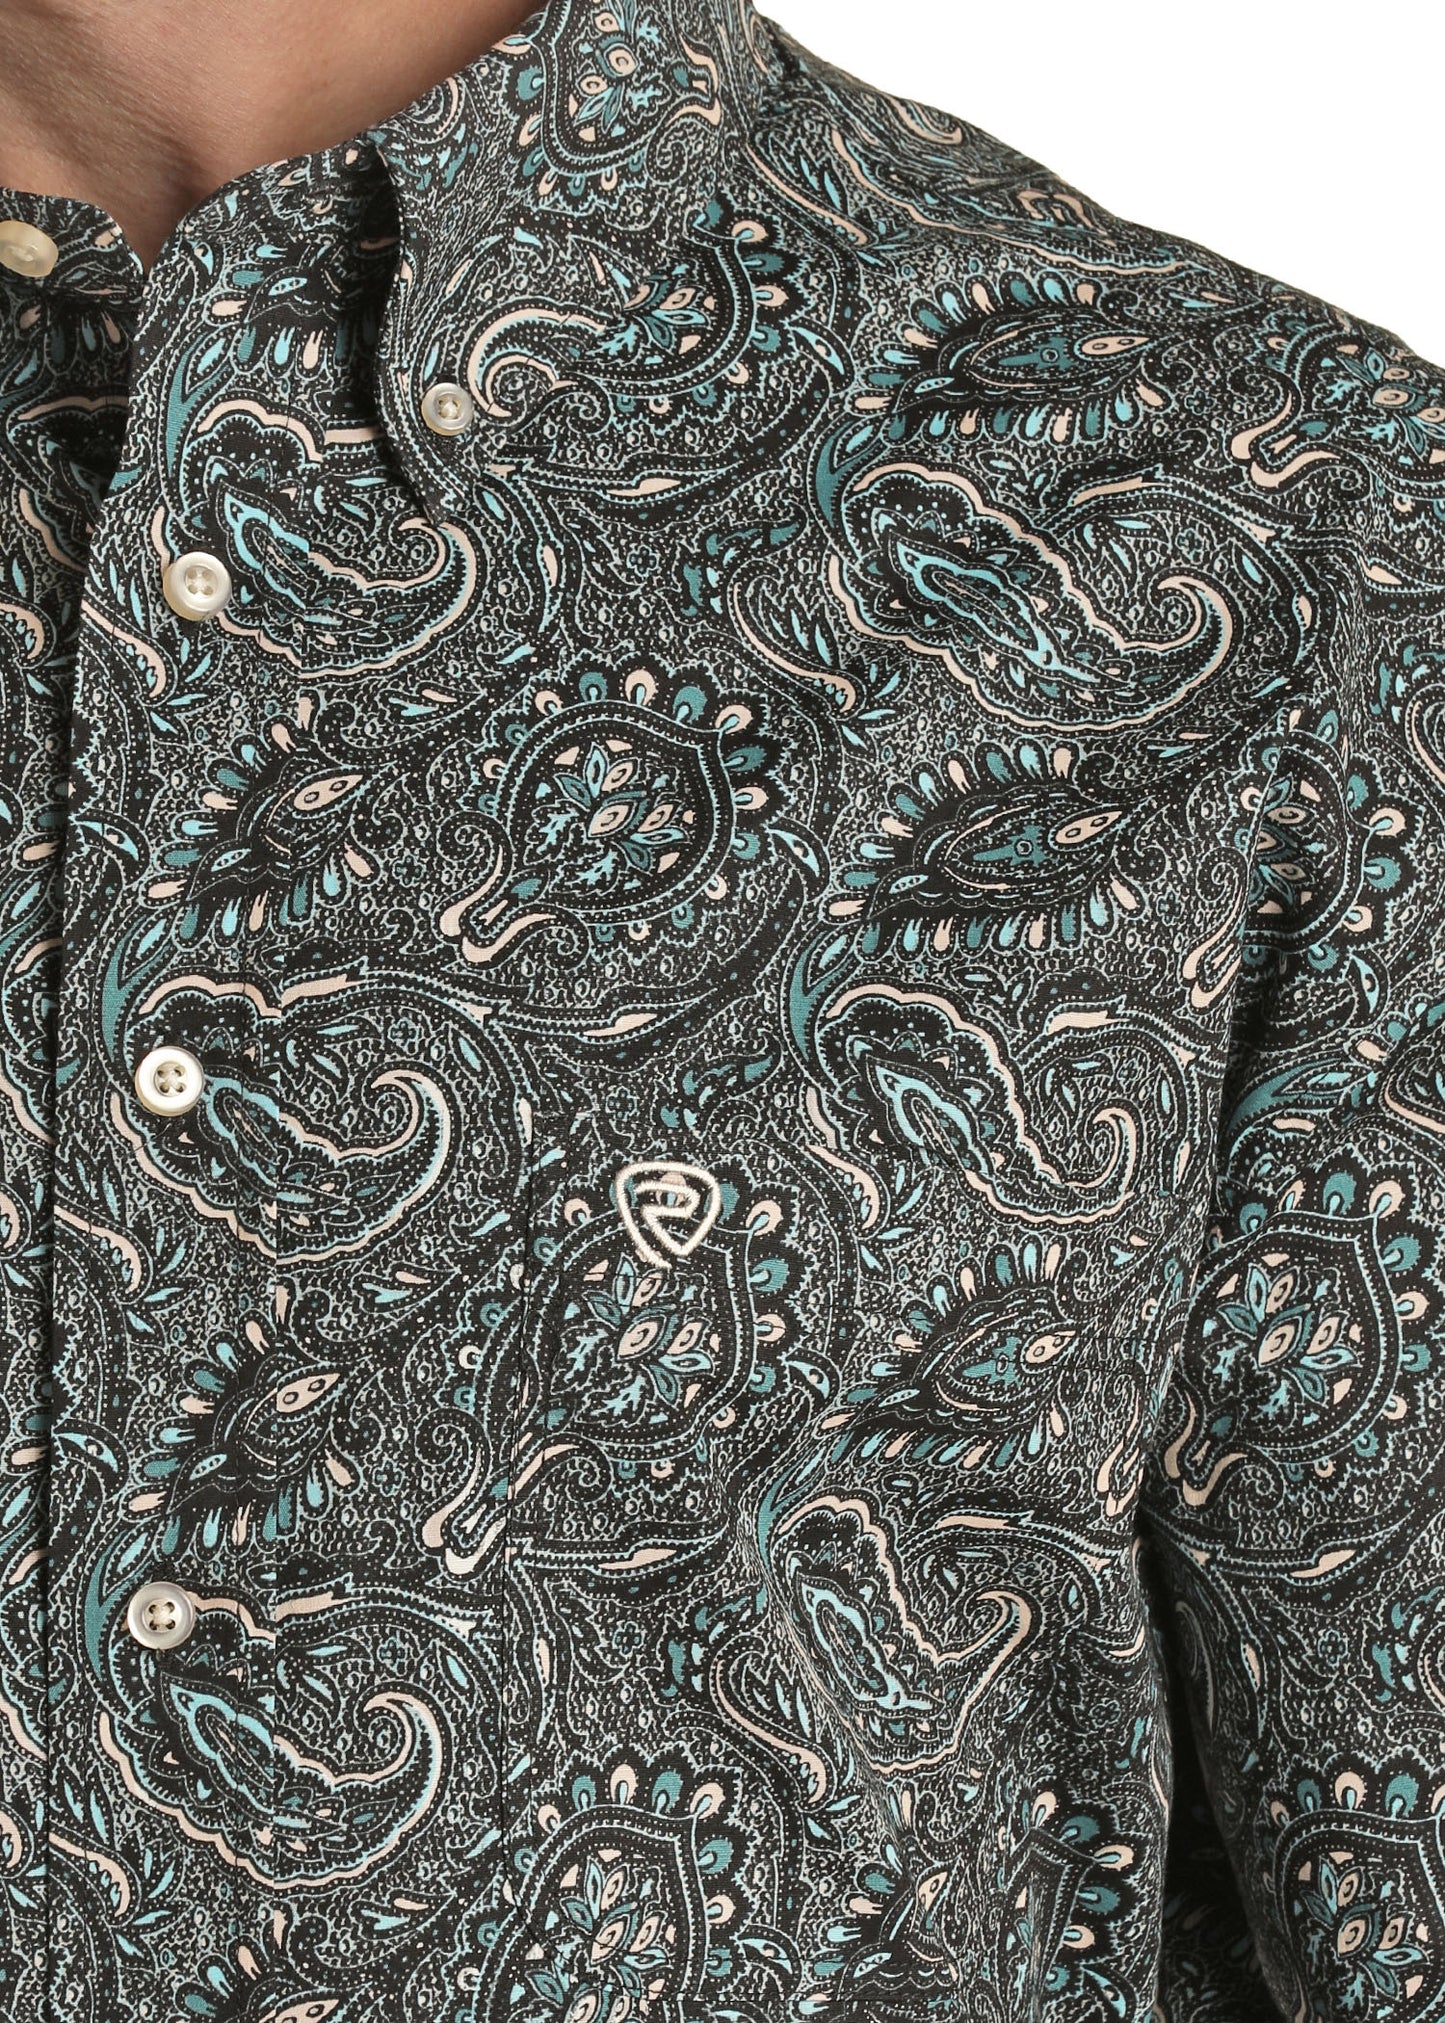 Rock & Roll Denim Men's Classic Fit Paisley Print Button Down Shirt Turquoise